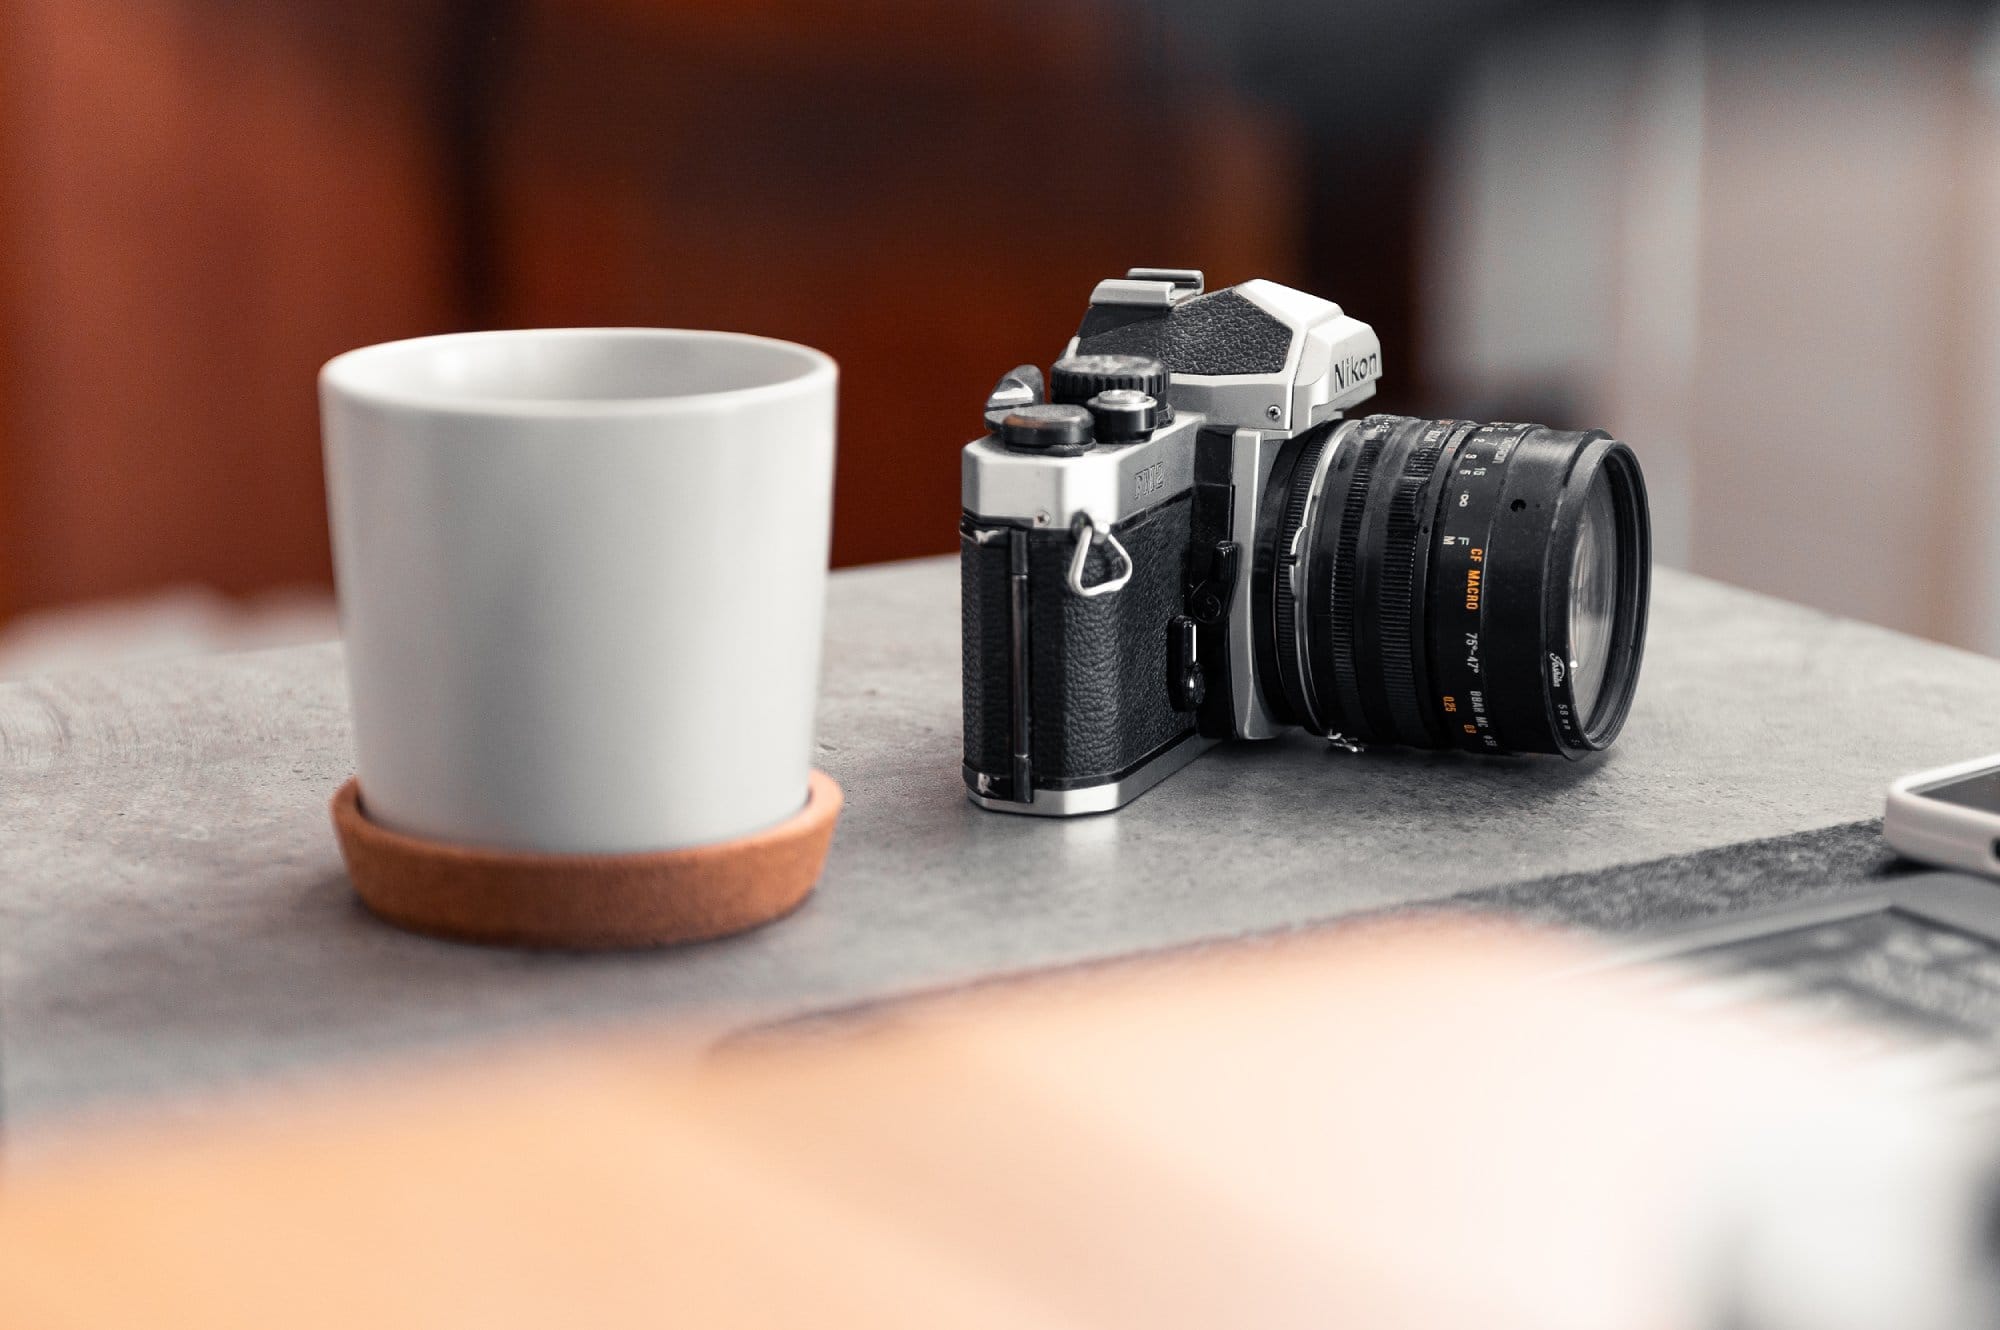 A vintage Nikon FM2 camera placed on a desk next to a white mug on a coaster